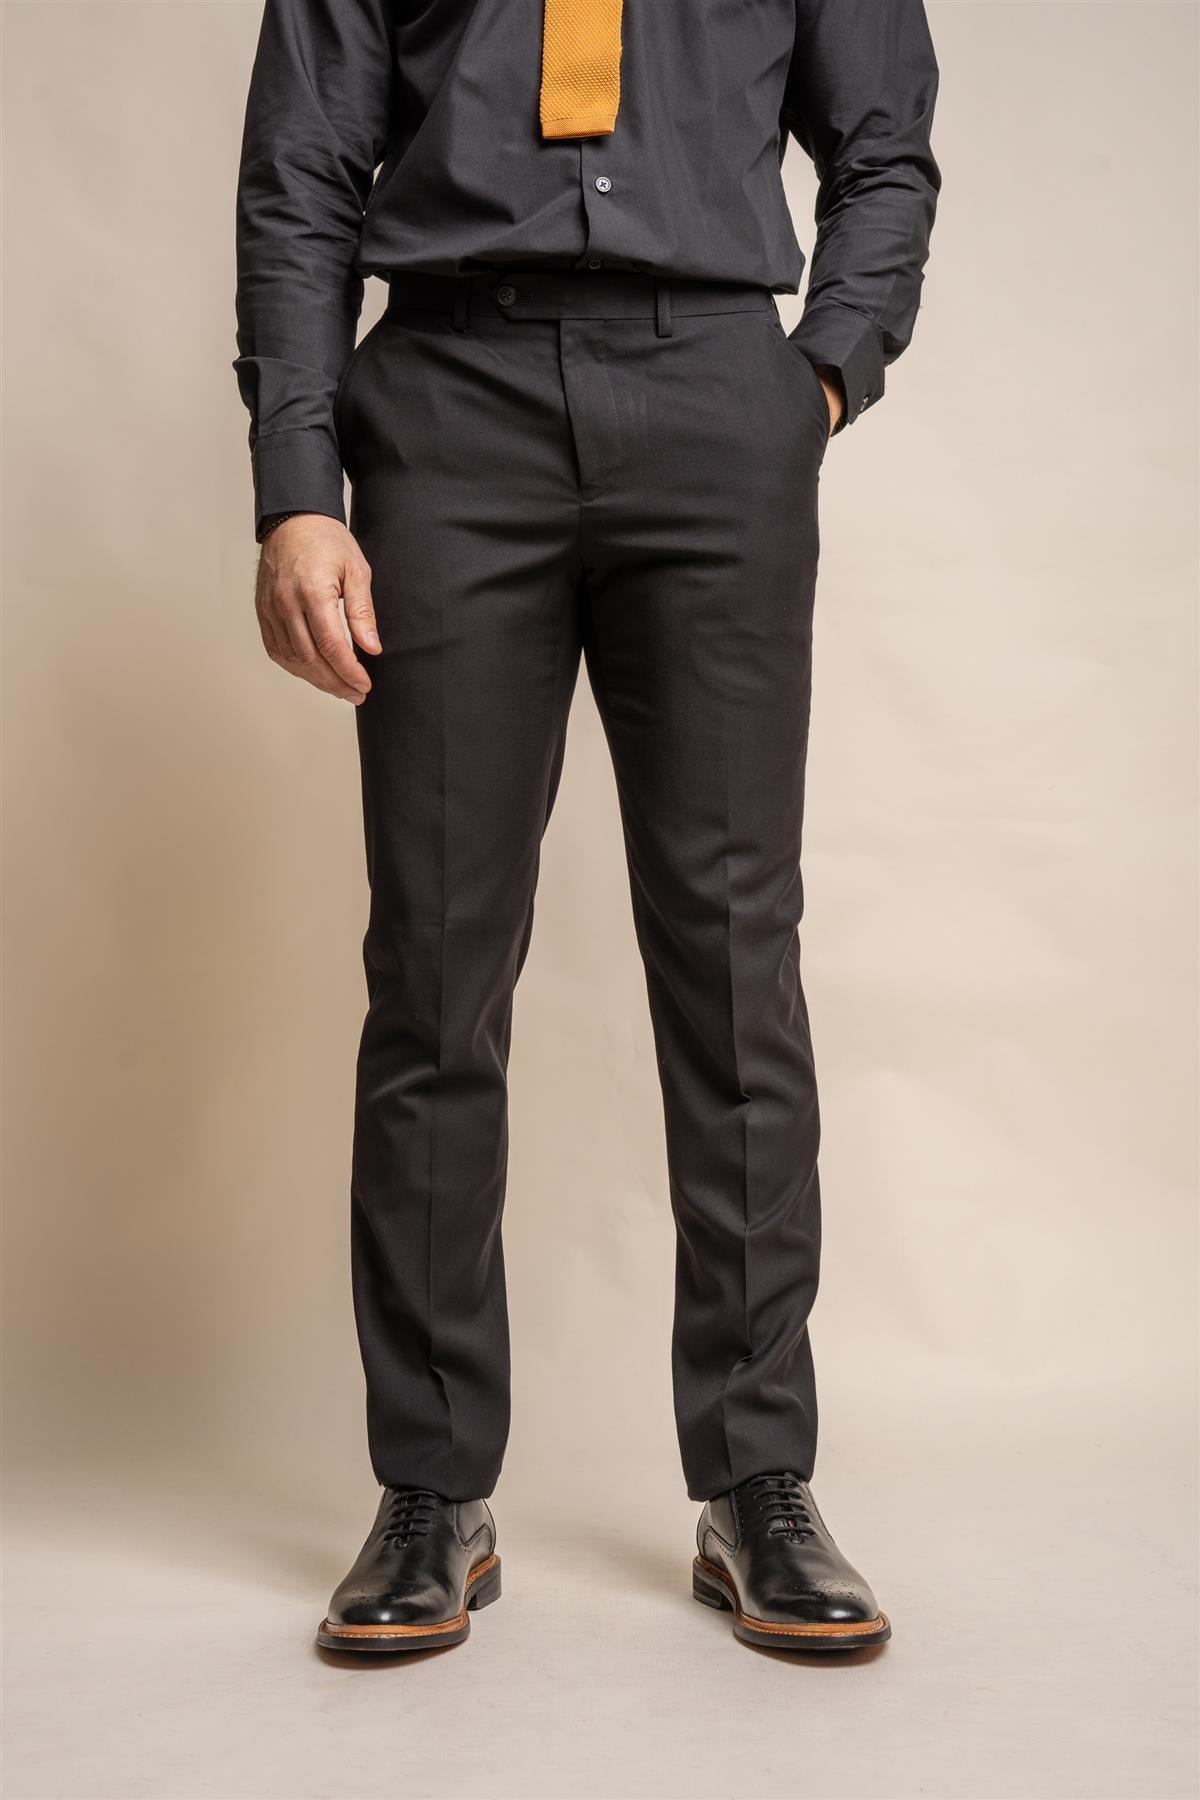 Marco black trouser front